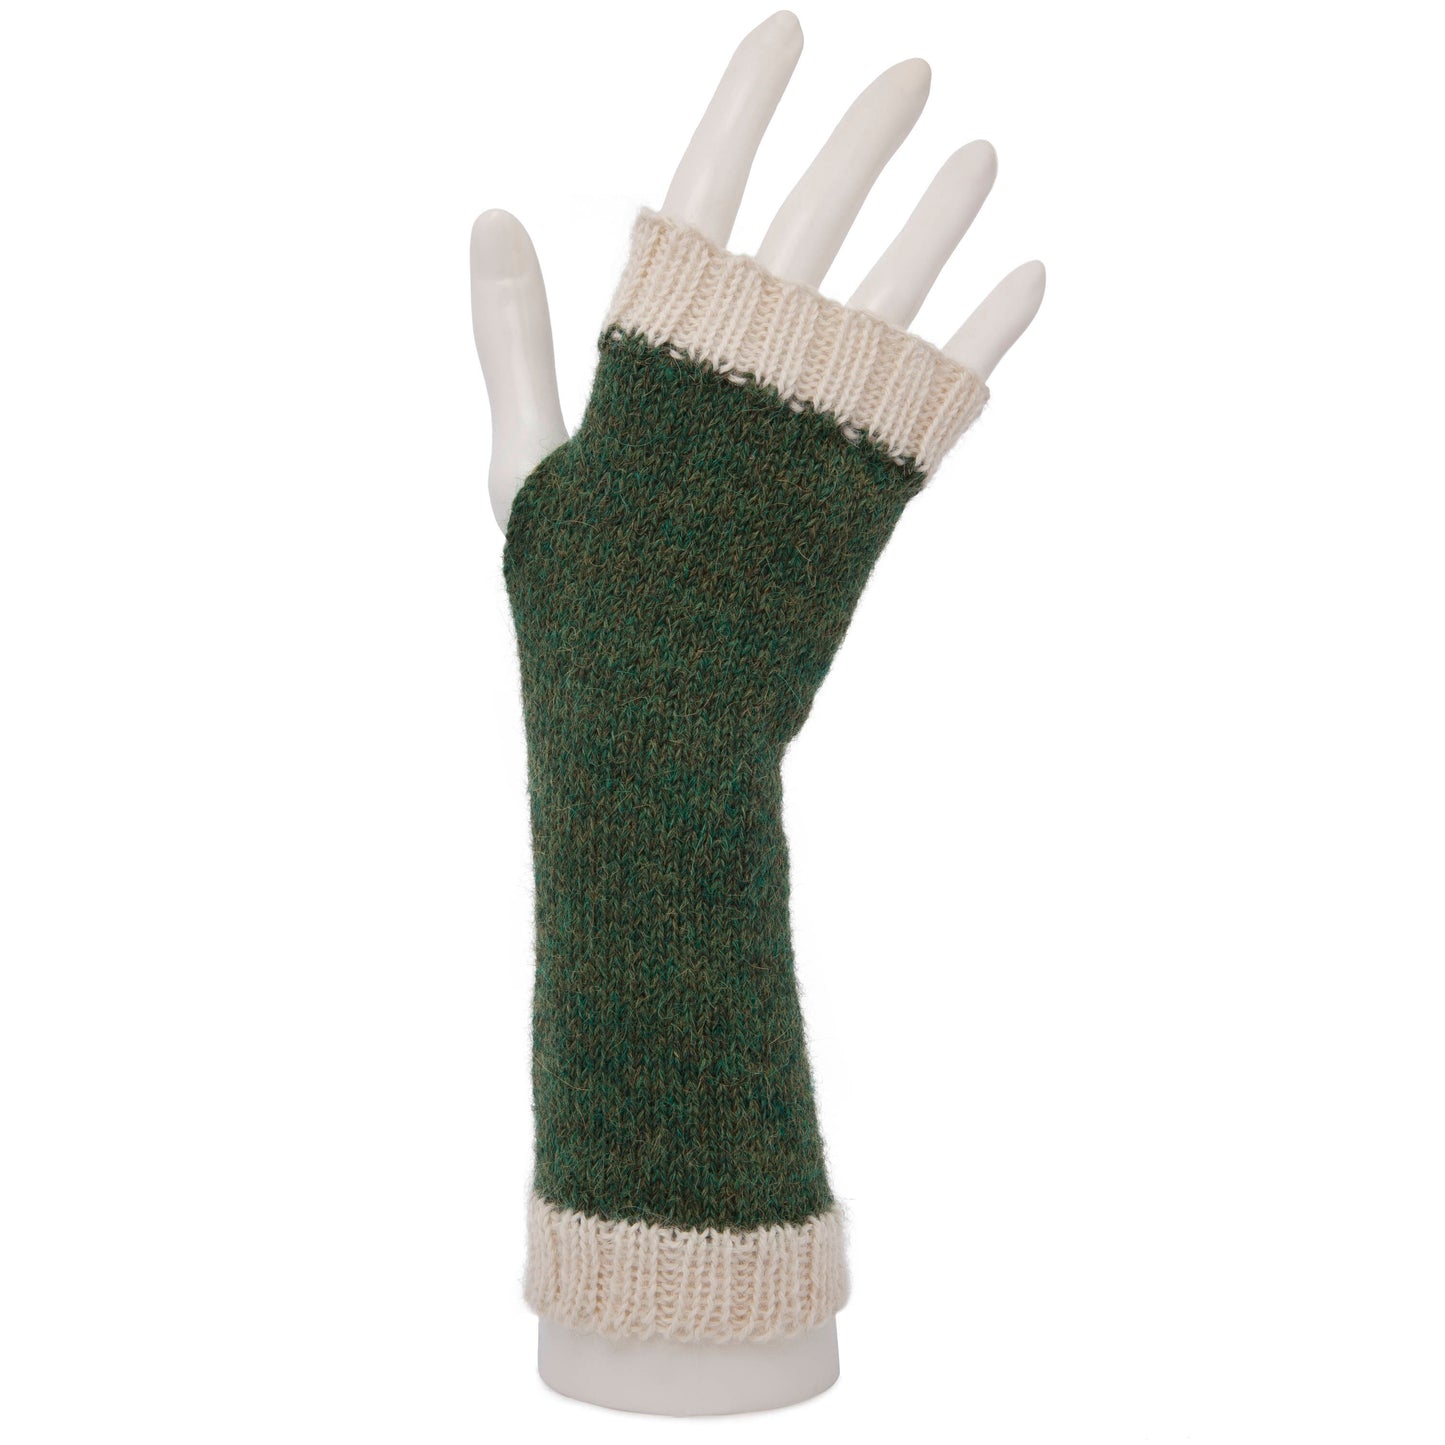 Fingerless Mittens Alpaca wool, Knitted Wrist warmers, Fair trade gloves, eco friendly woollen knit hand warmer natural fibres, plastic free